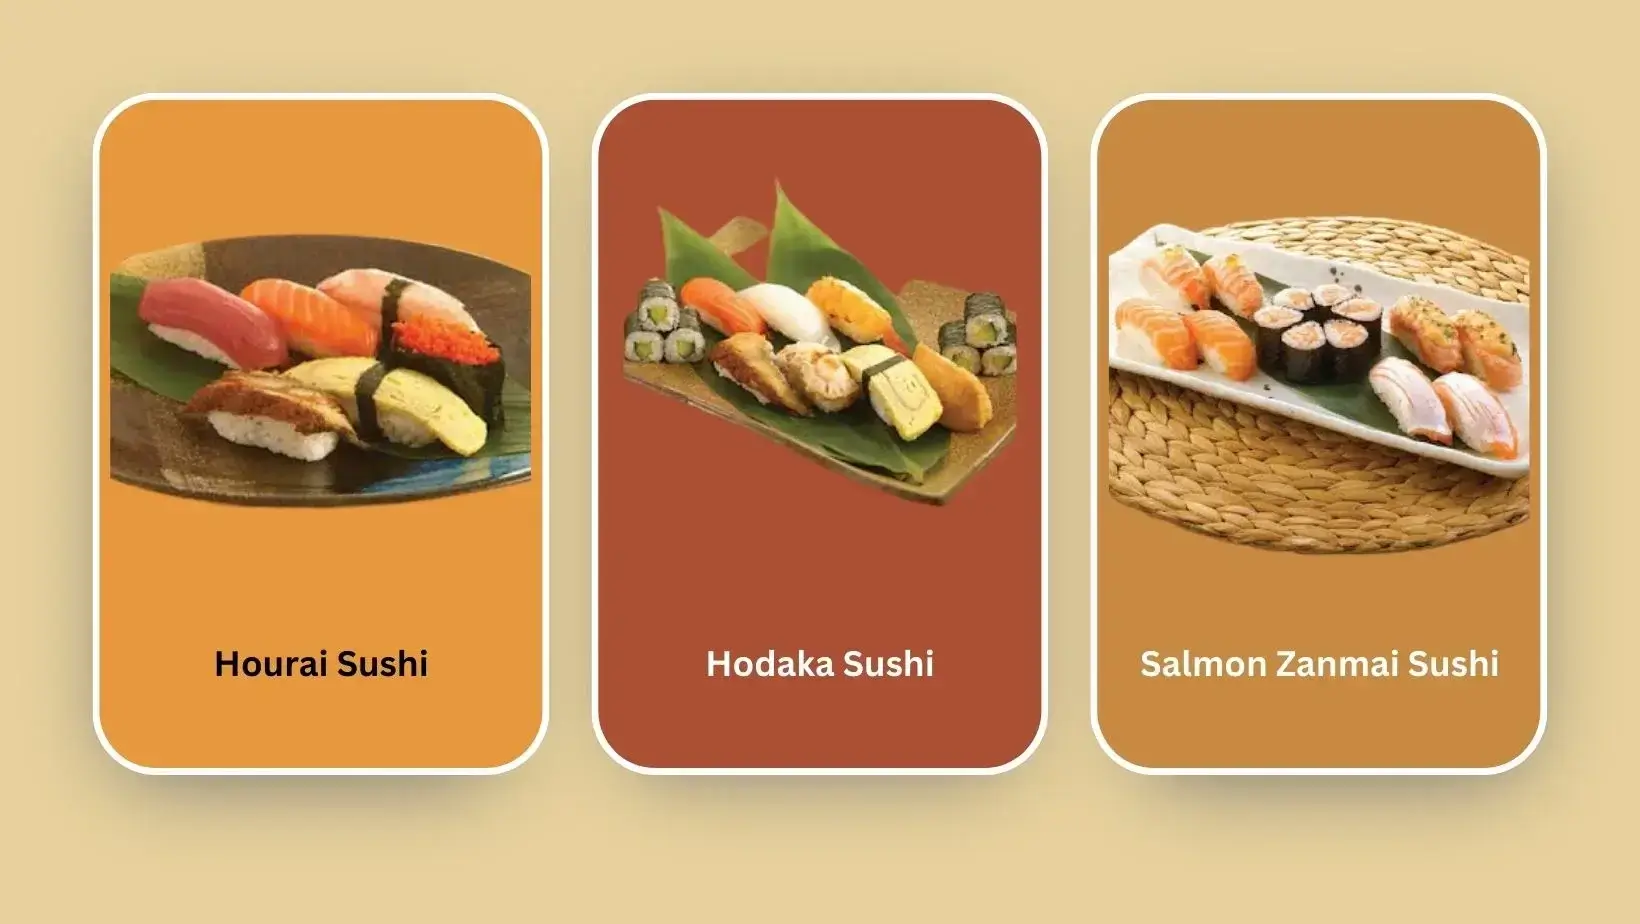 Salmon Zanmai Sushi, Hodaka Sushi, Hourai Sushi